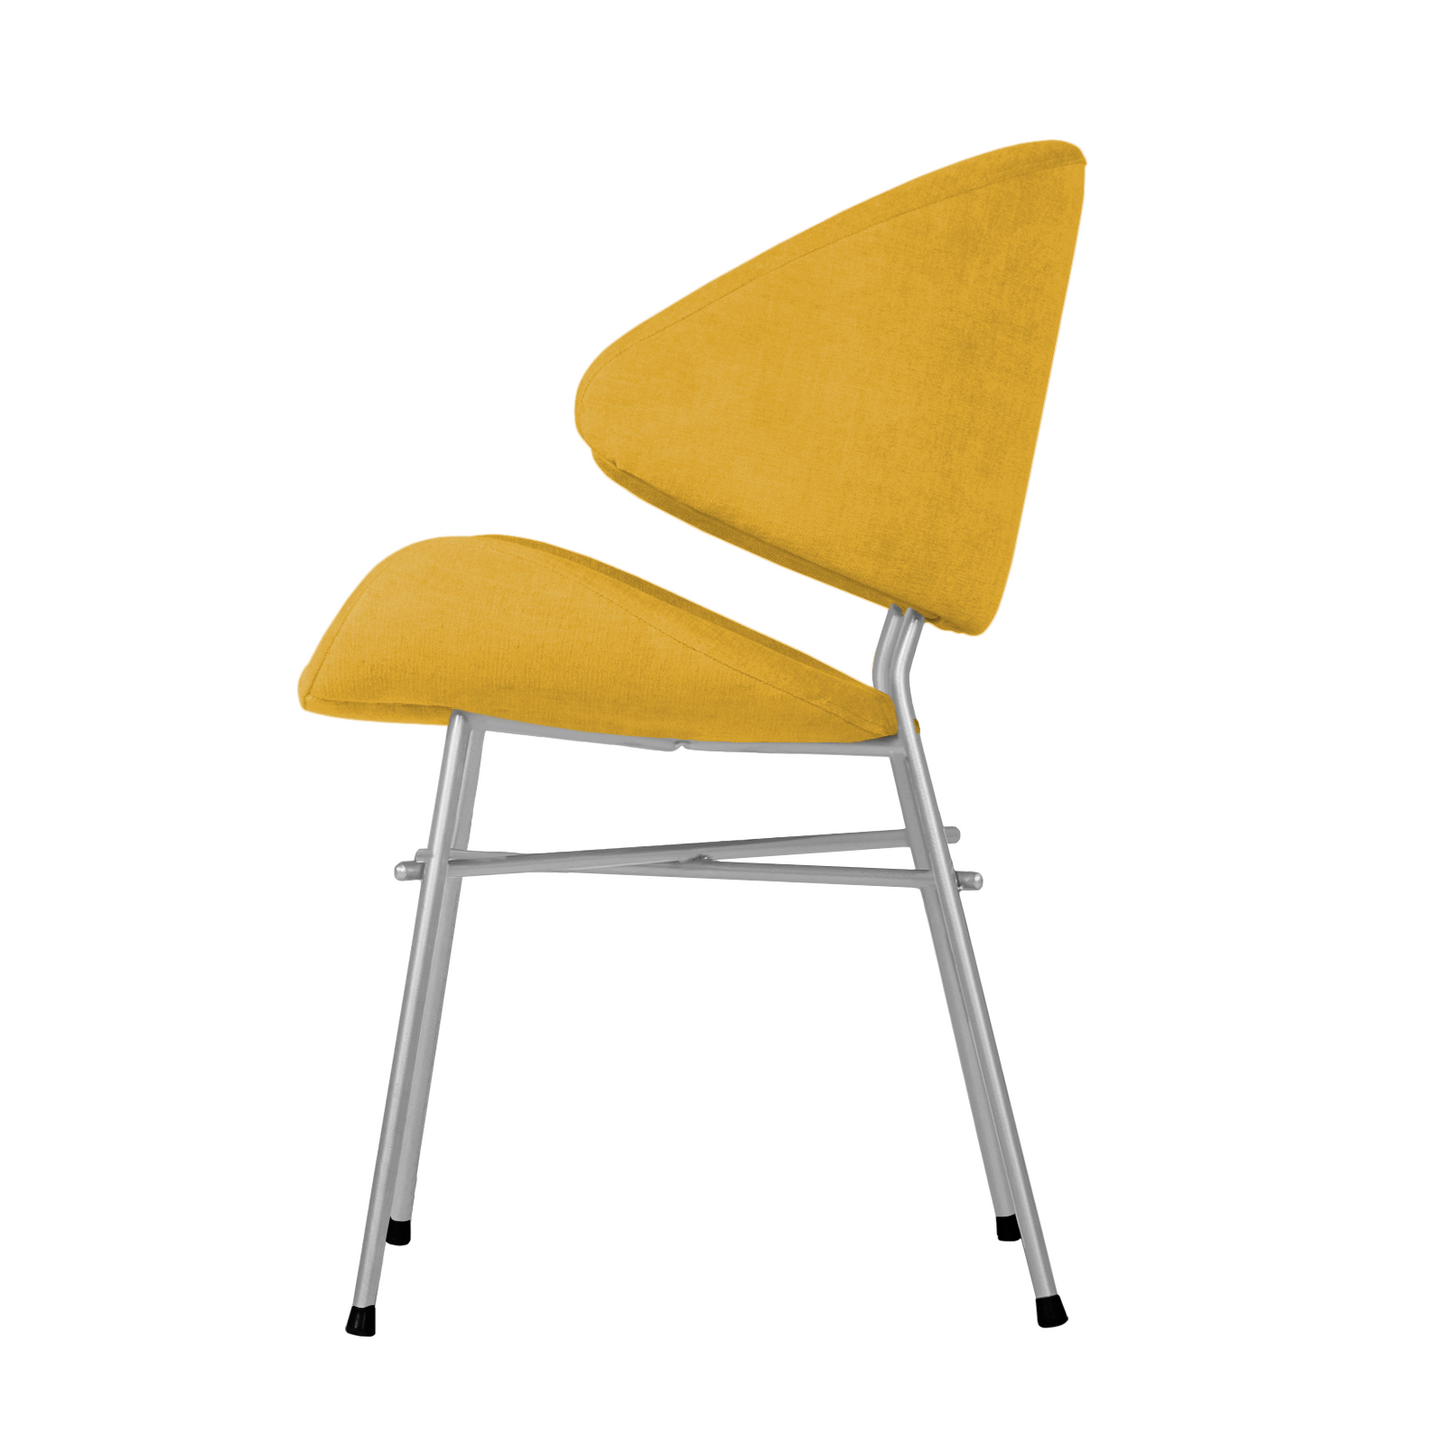 Chair Cheri Trend Chrome - Mustard